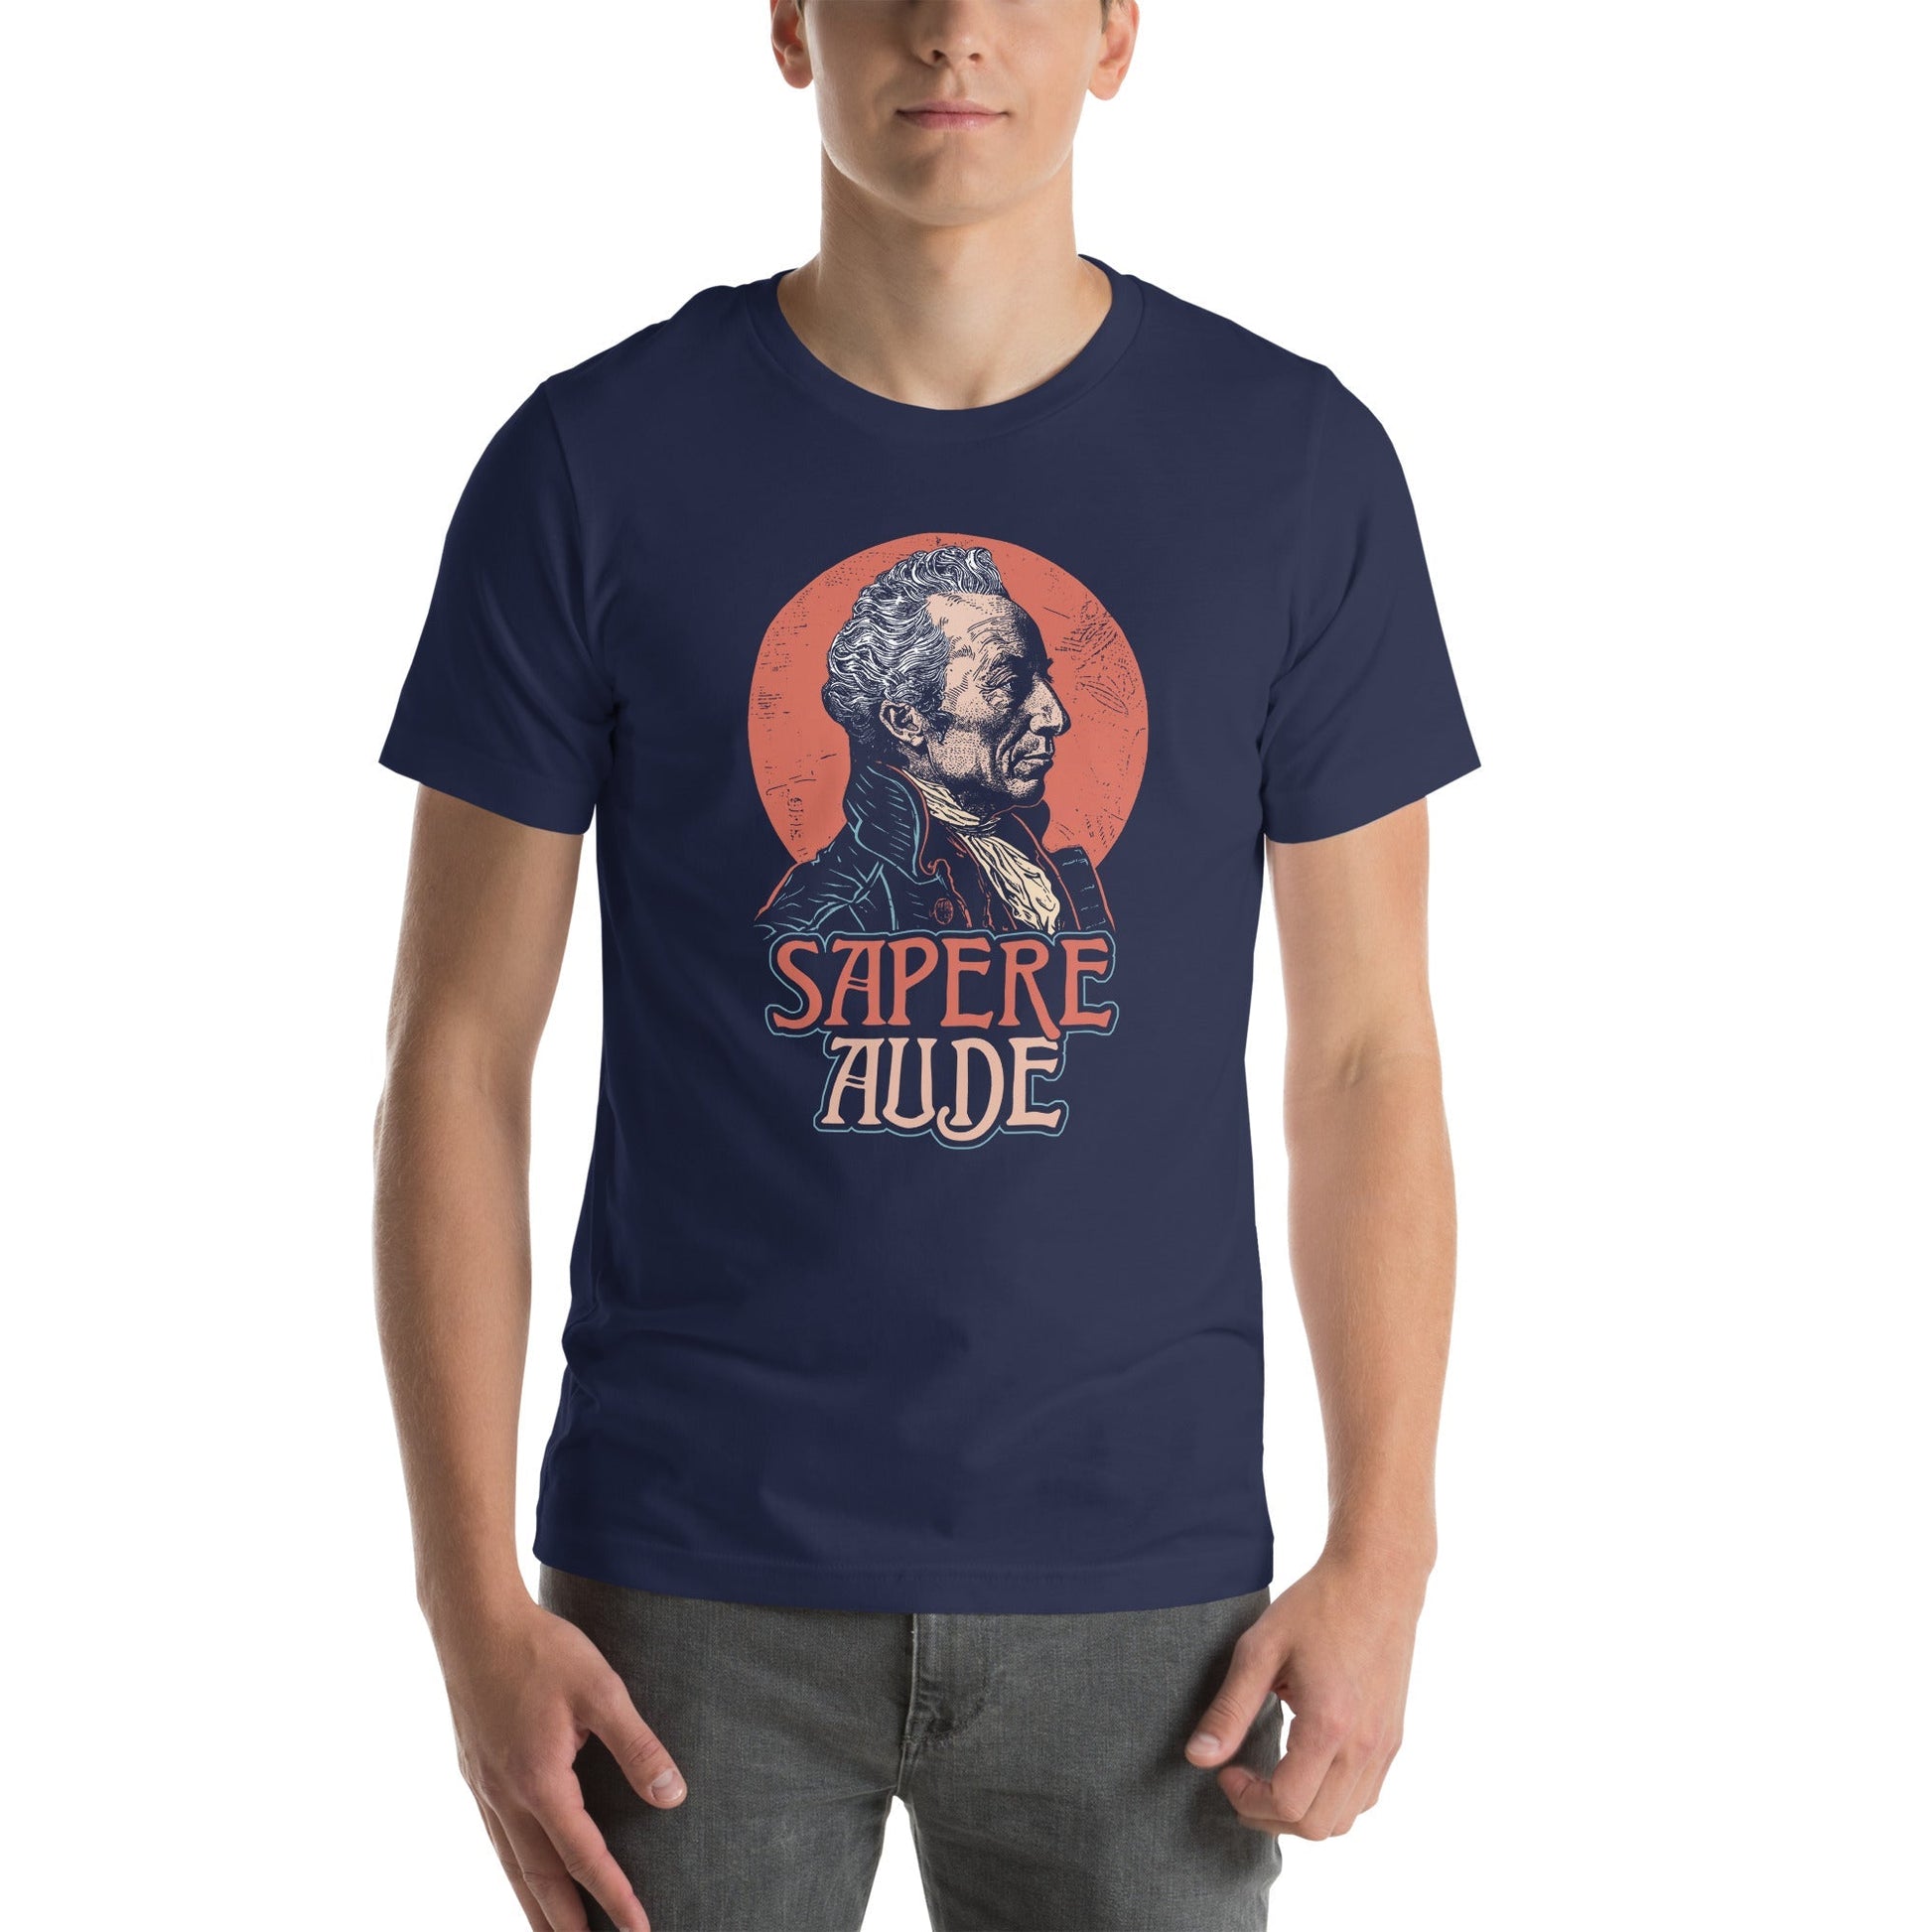 Immanuel Kant - Sapere Aude - Basic T-Shirt